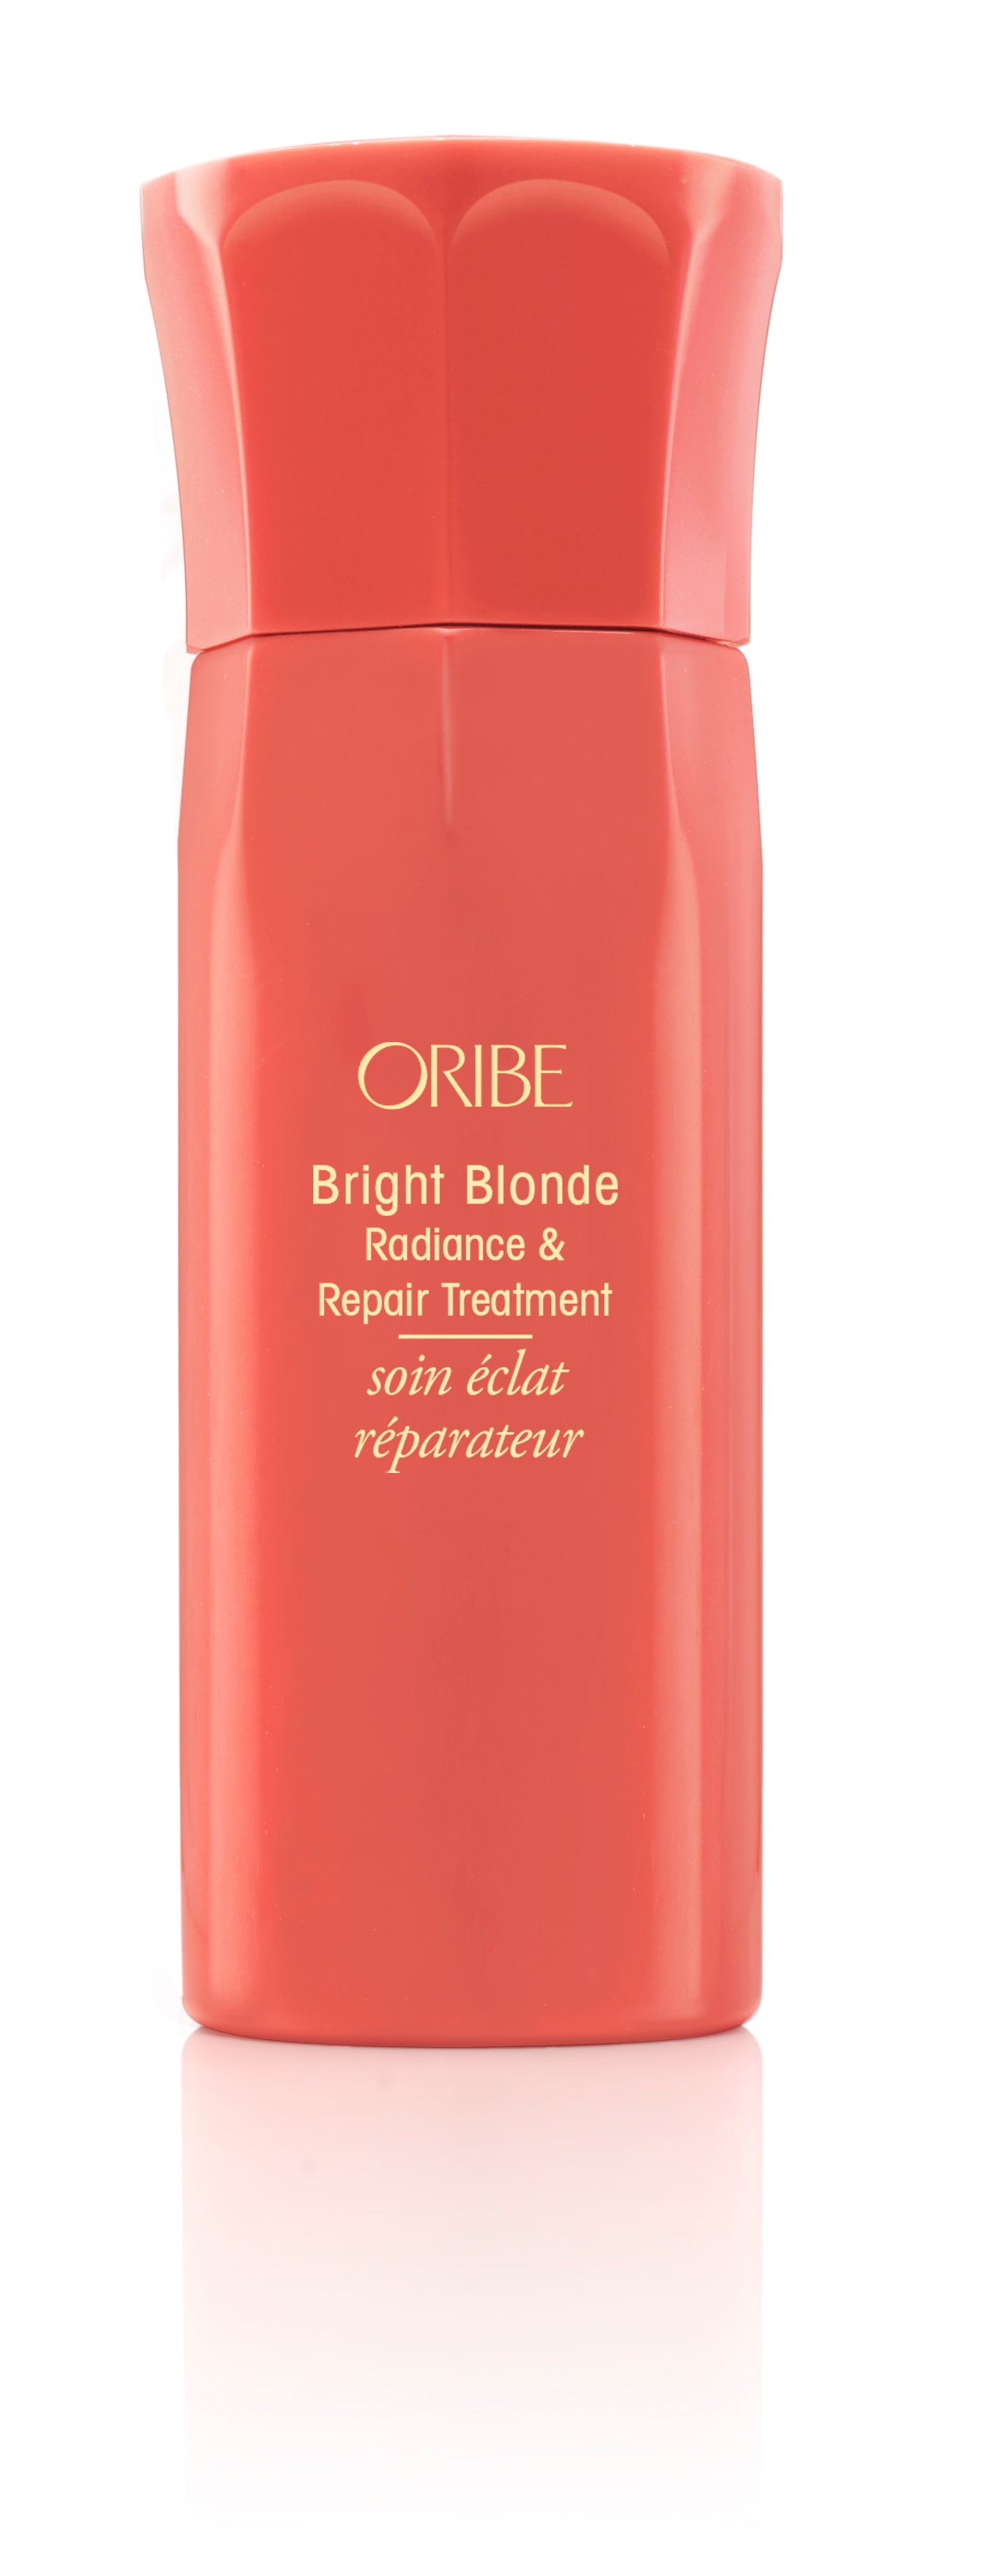 Bright Blonde Radiance & Repair Treatment